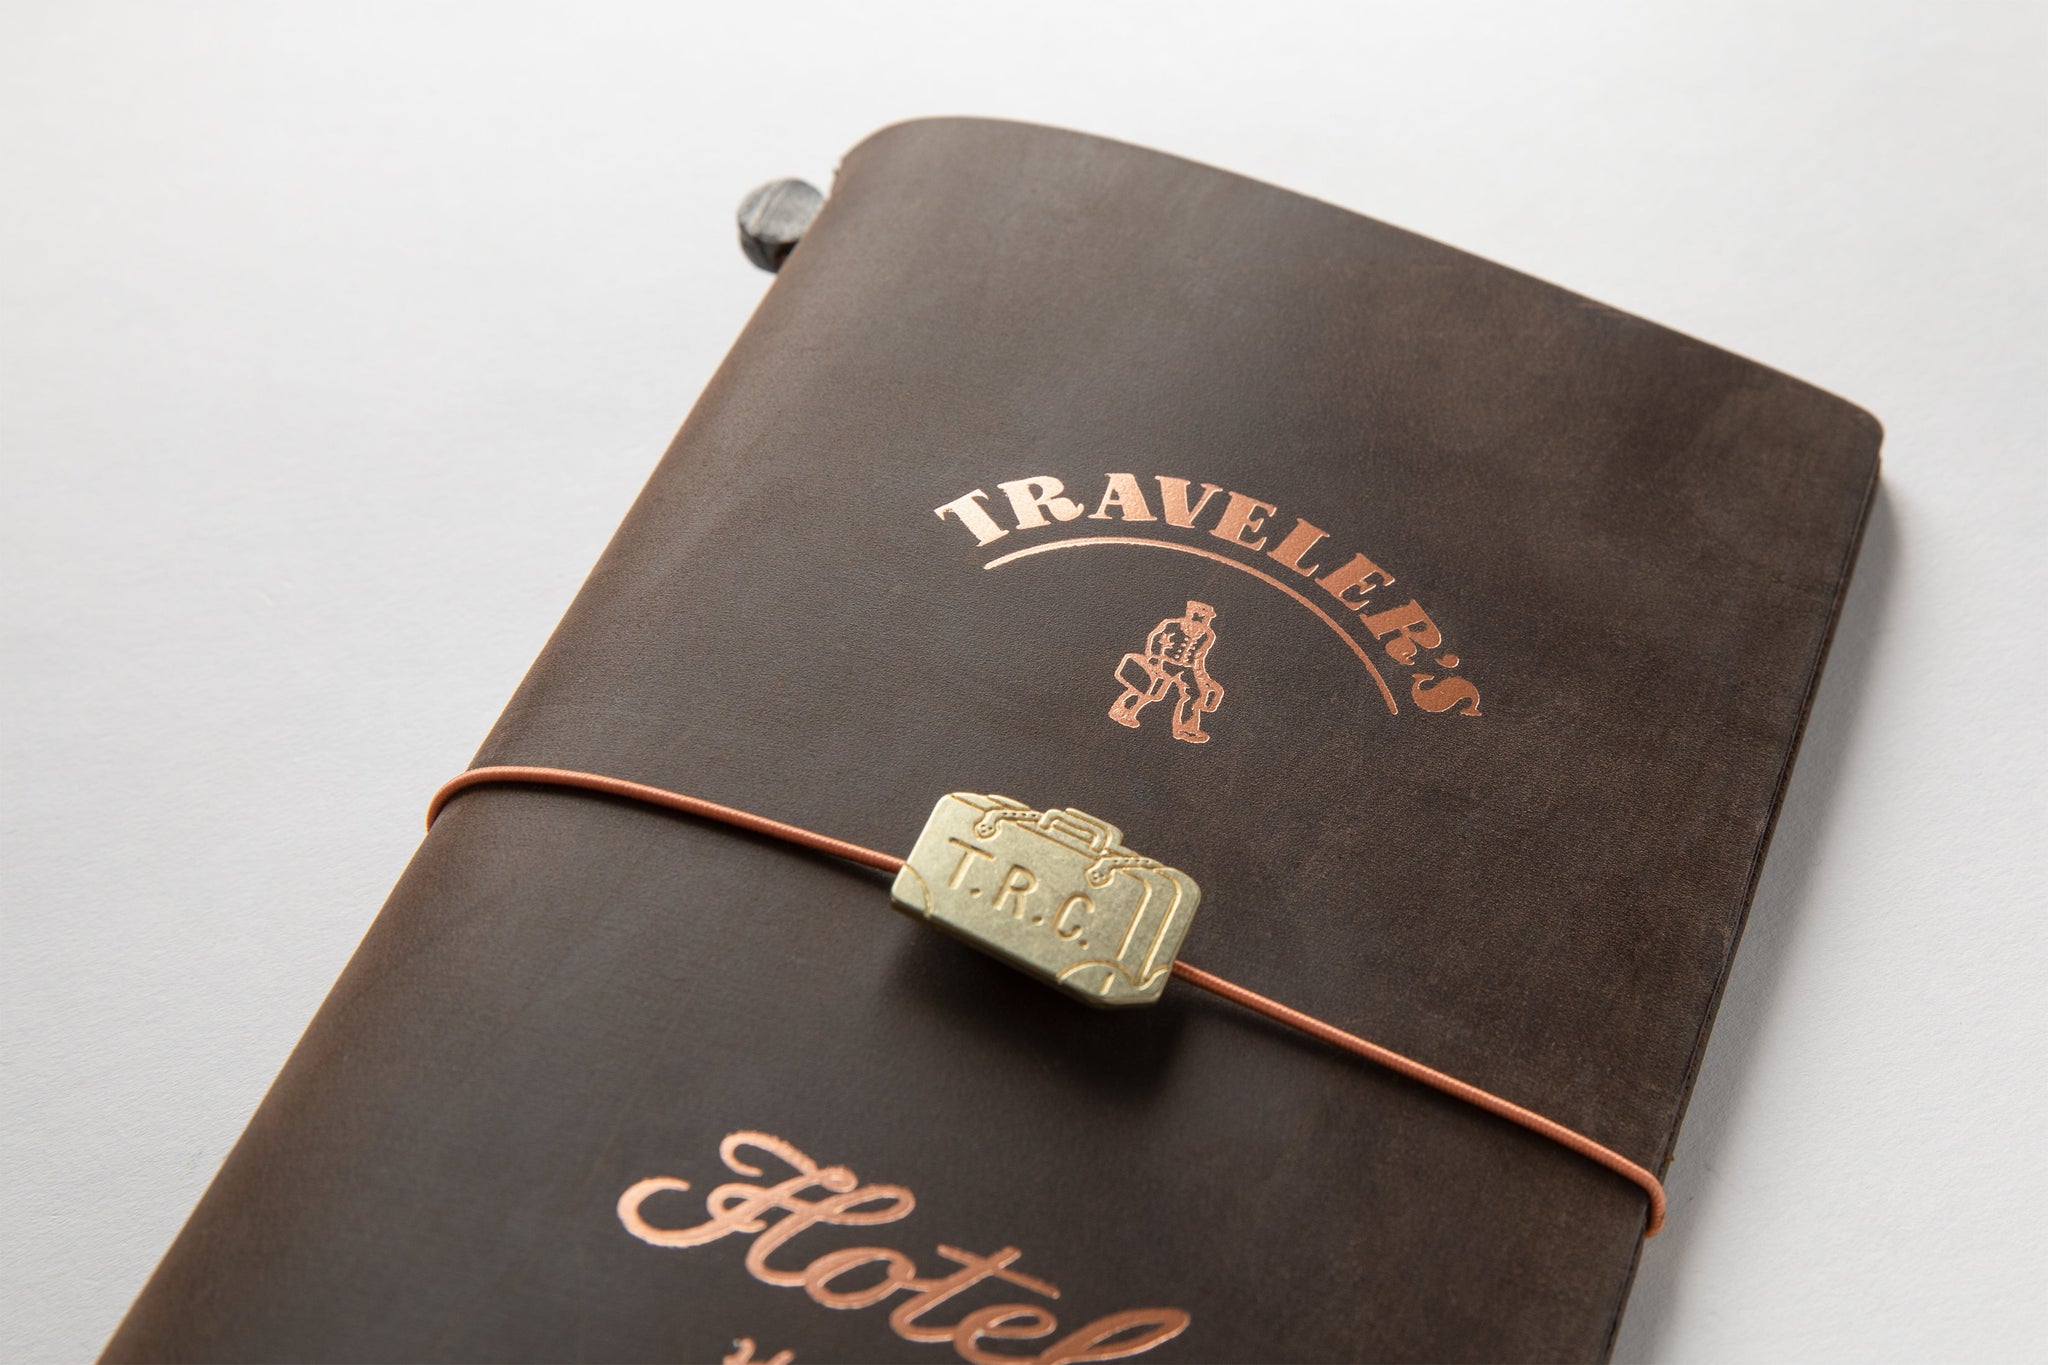 Traveler’s Company - Traveler's Hotel Limited Edition Set